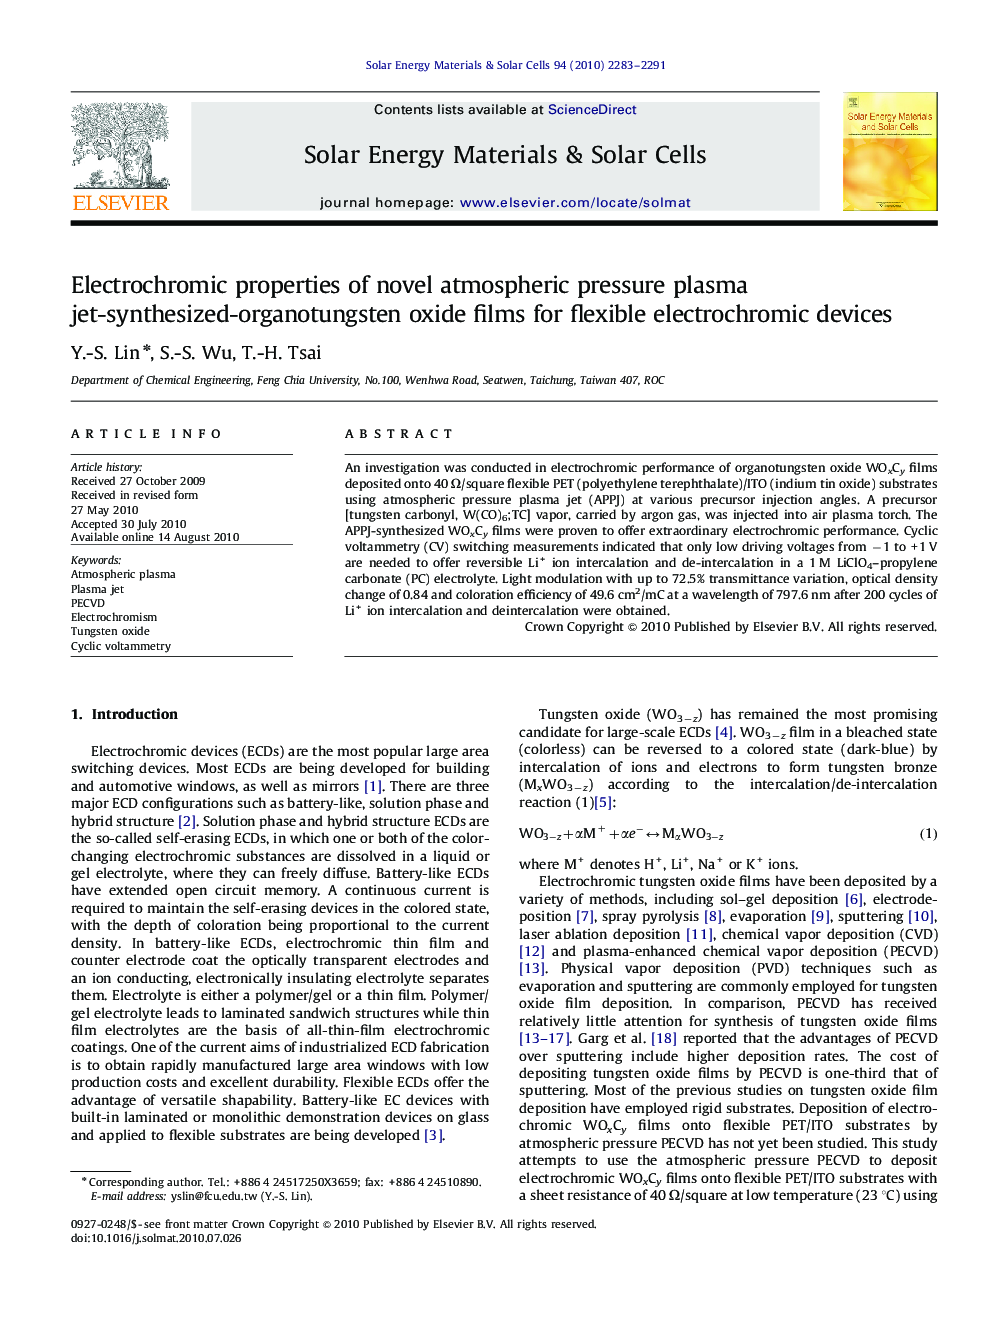 Electrochromic properties of novel atmospheric pressure plasma jet-synthesized-organotungsten oxide films for flexible electrochromic devices